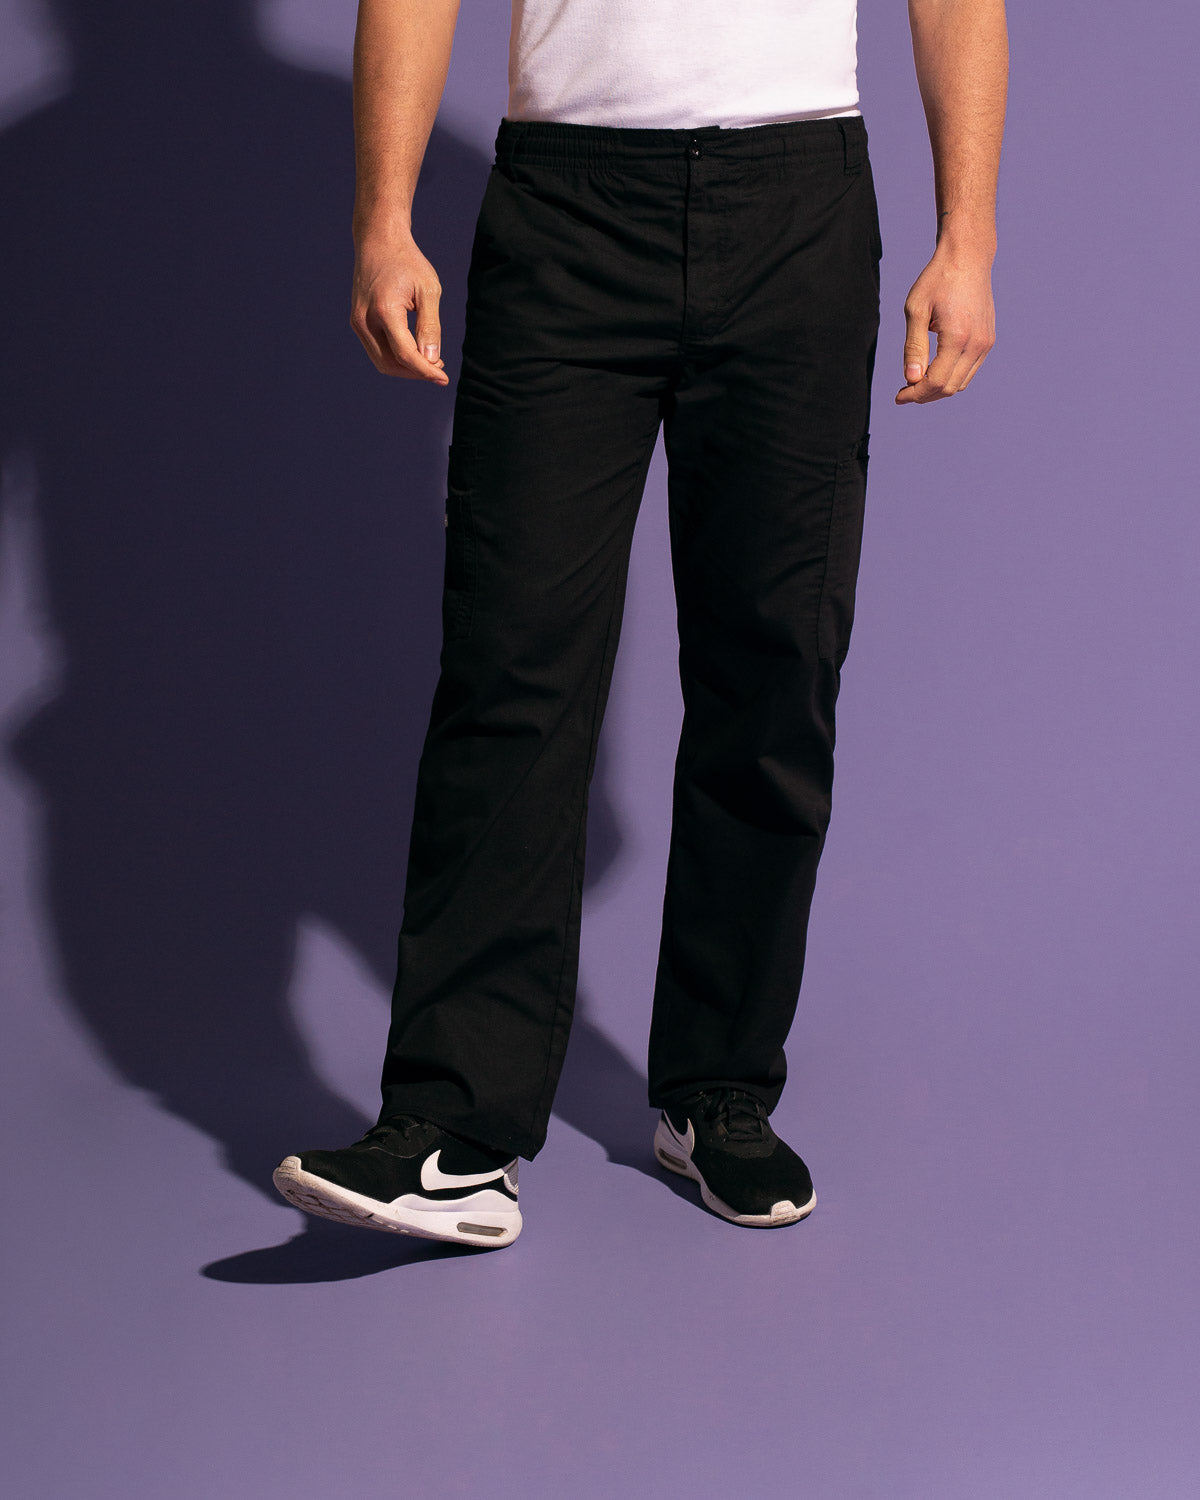 Pantalón Hombre Negro | Uniformes Clínicos | Basics